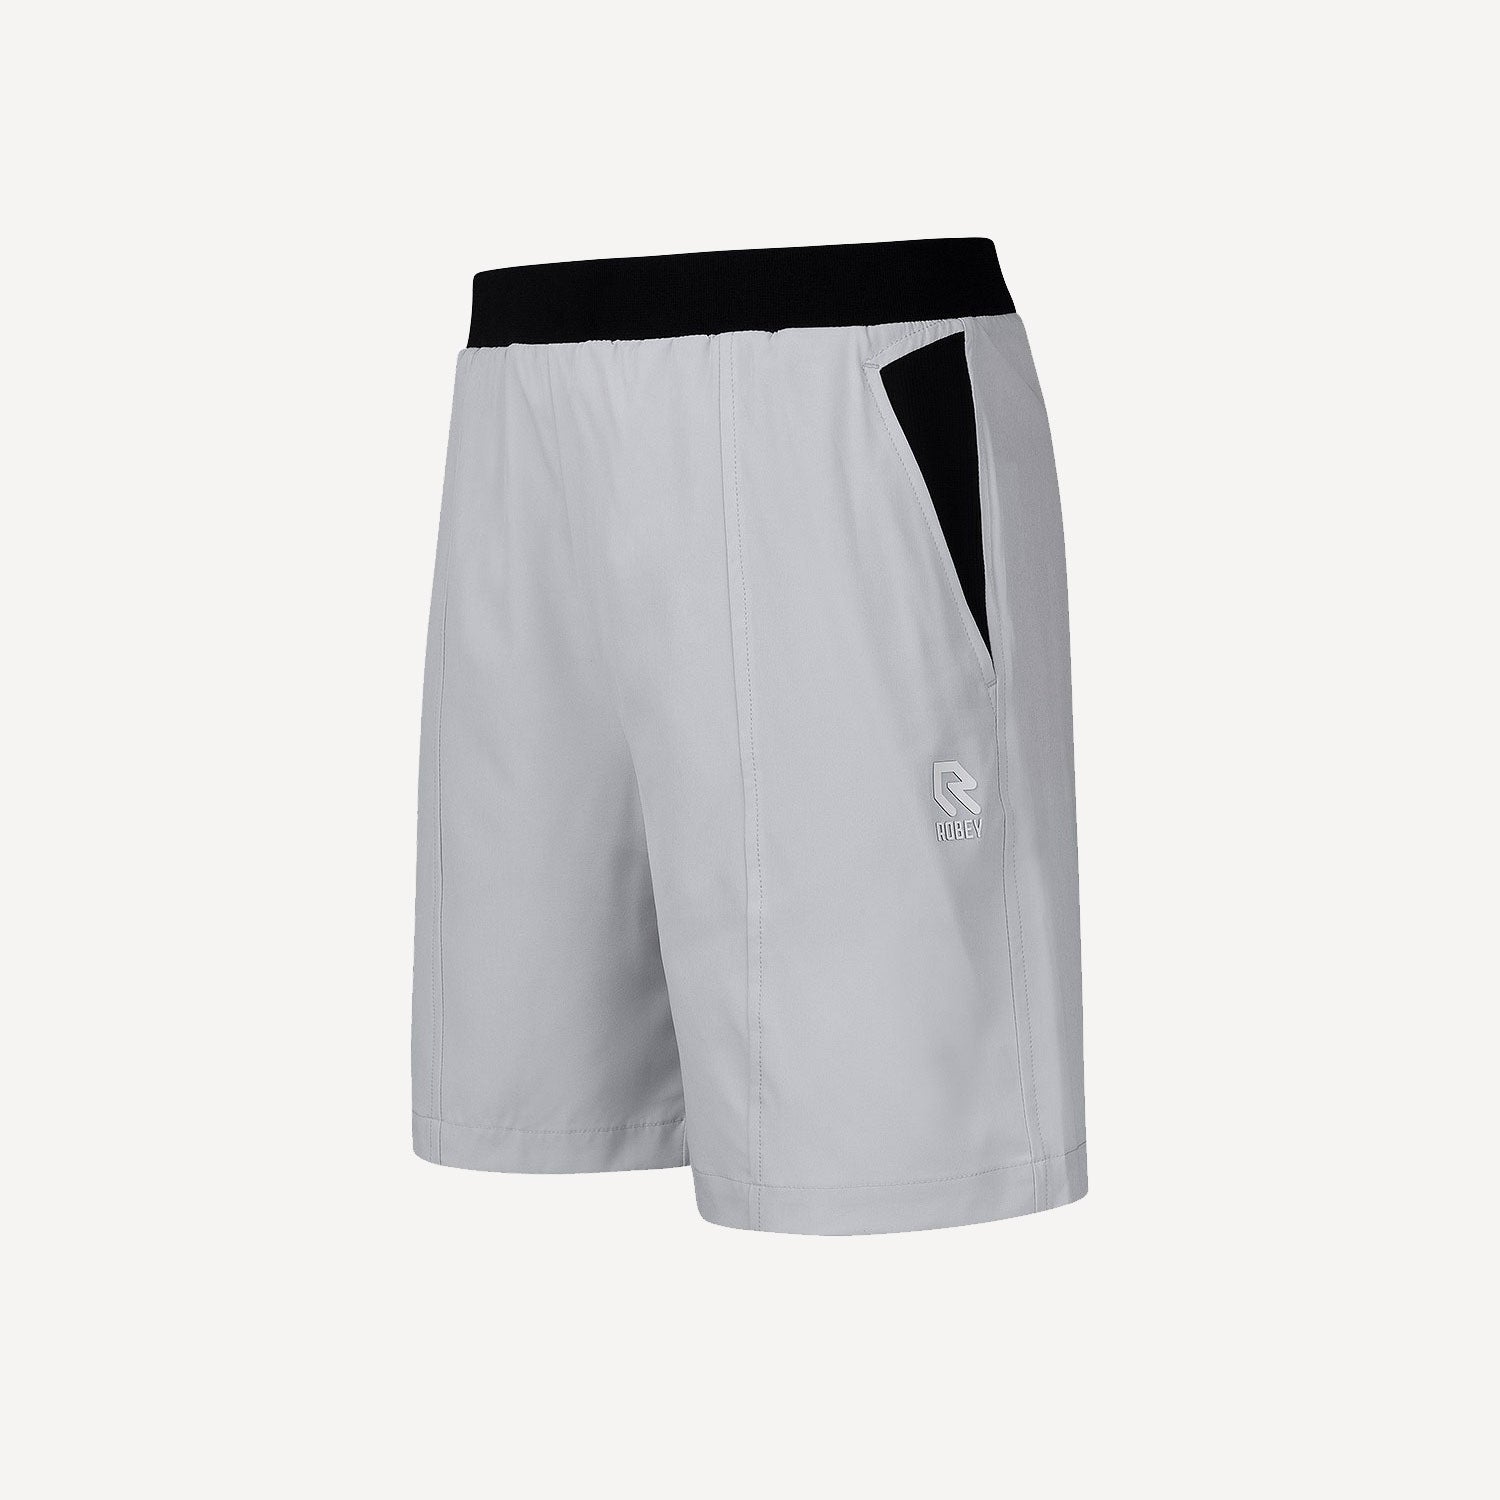 Robey Ace Men's Tennis Shorts - Grey (2)